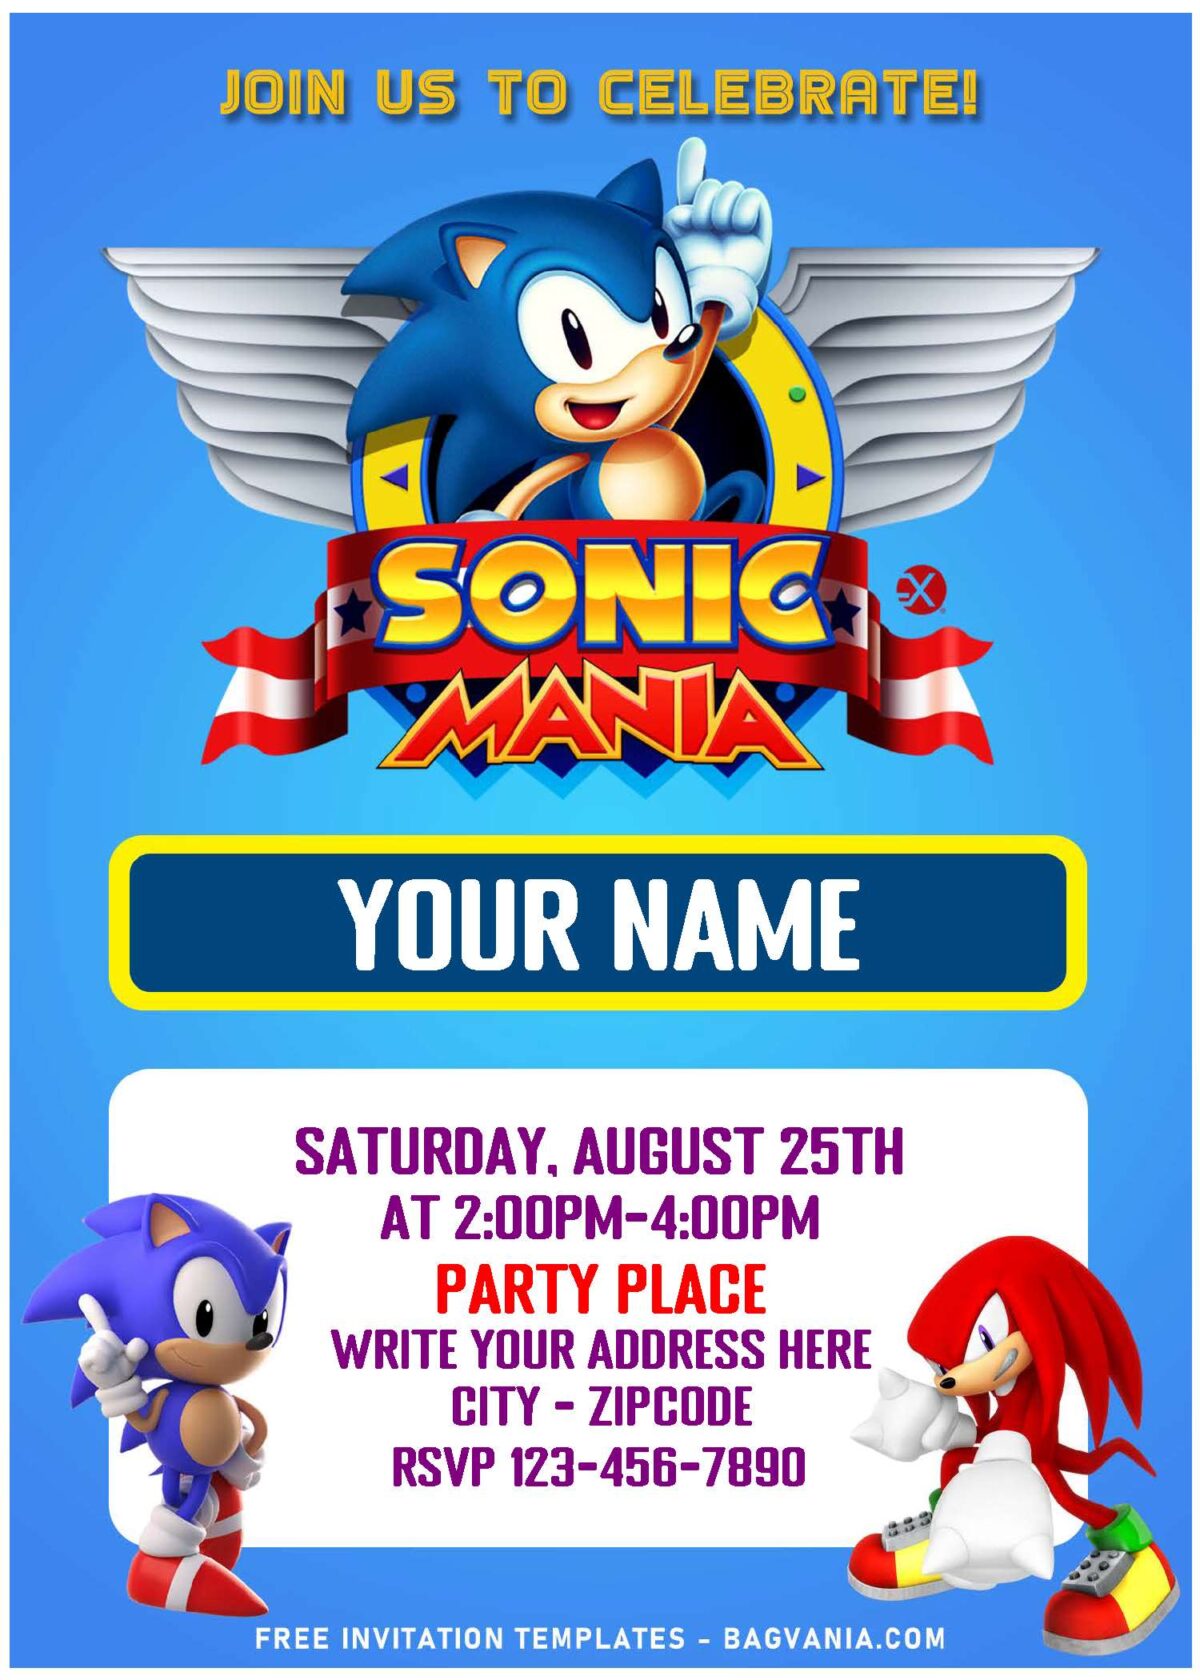 (Free Editable PDF) Super Cool Classic Sonic The Hedgehog Birthday Invitation Templates with editable text